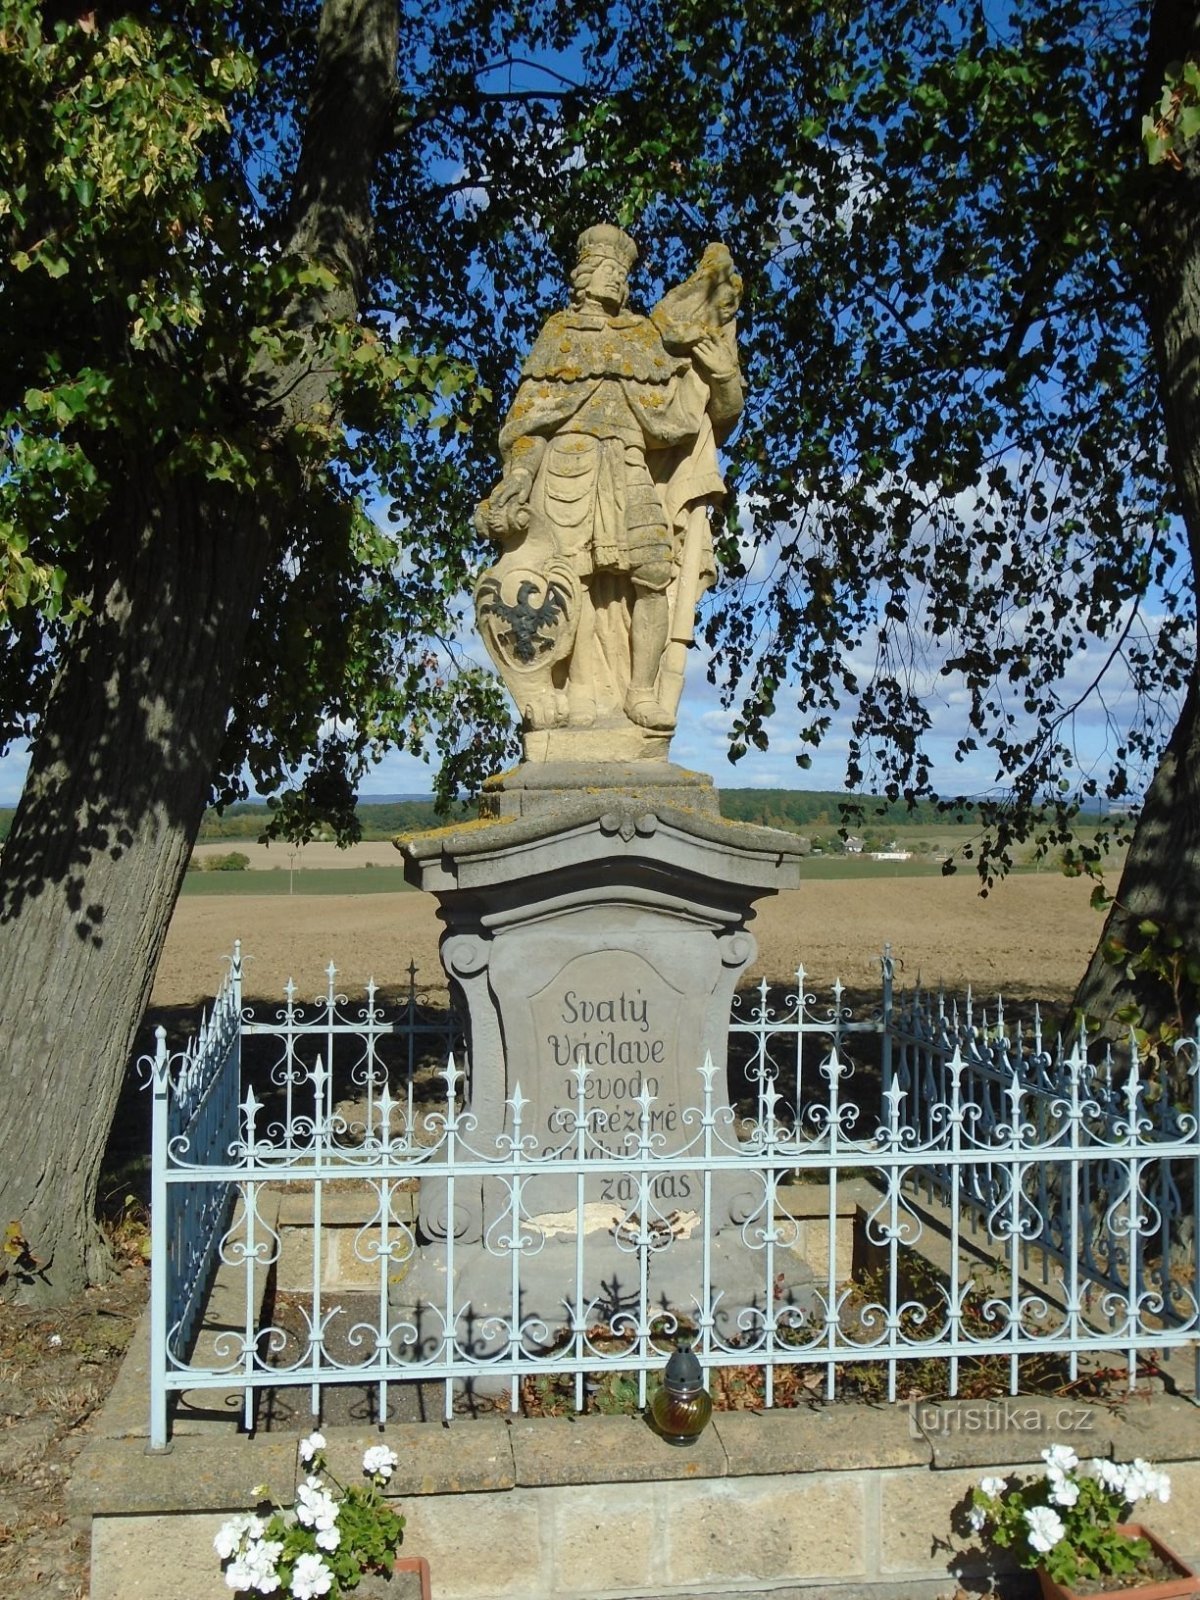 Statue of St. Václav (Petrovice, 29.9.2018/XNUMX/XNUMX)